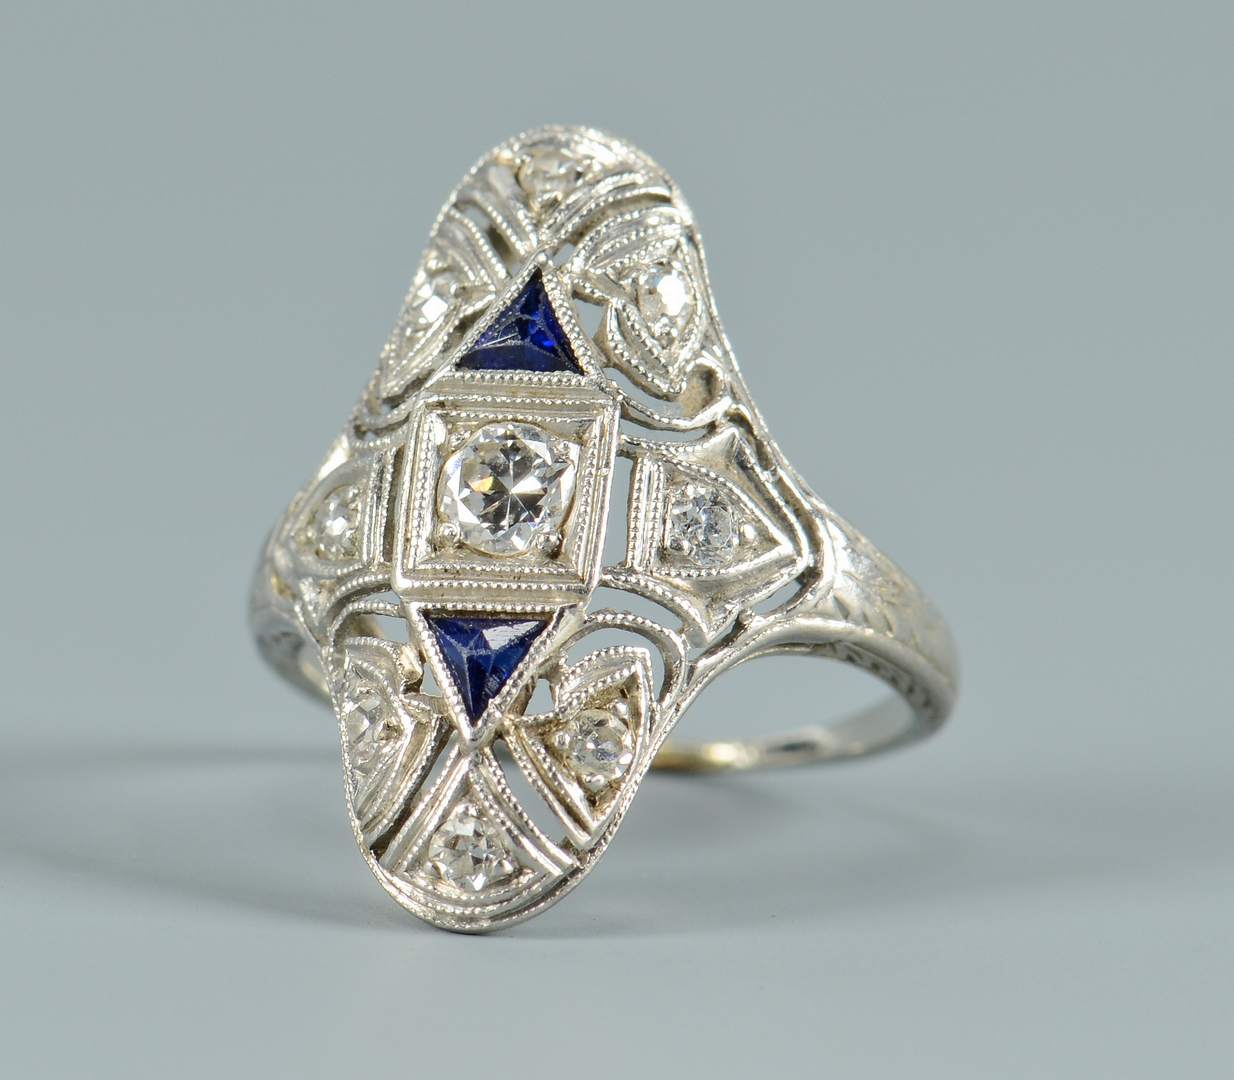 Lot 3088228: Art Deco Diamond, Sapphire Ring